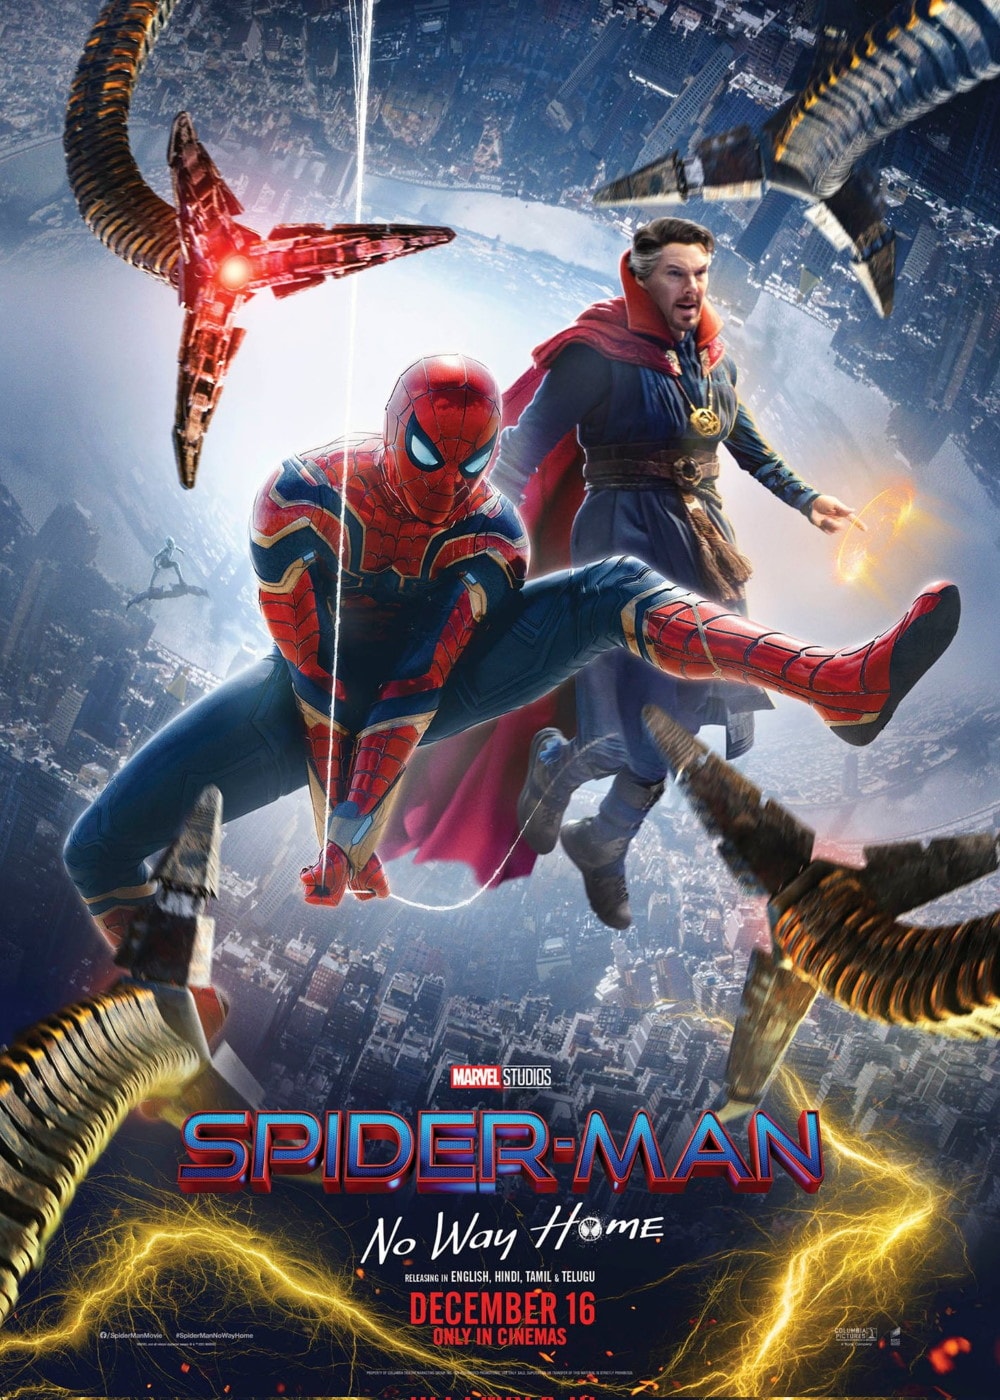 Spiderman no way home hindi download open music download